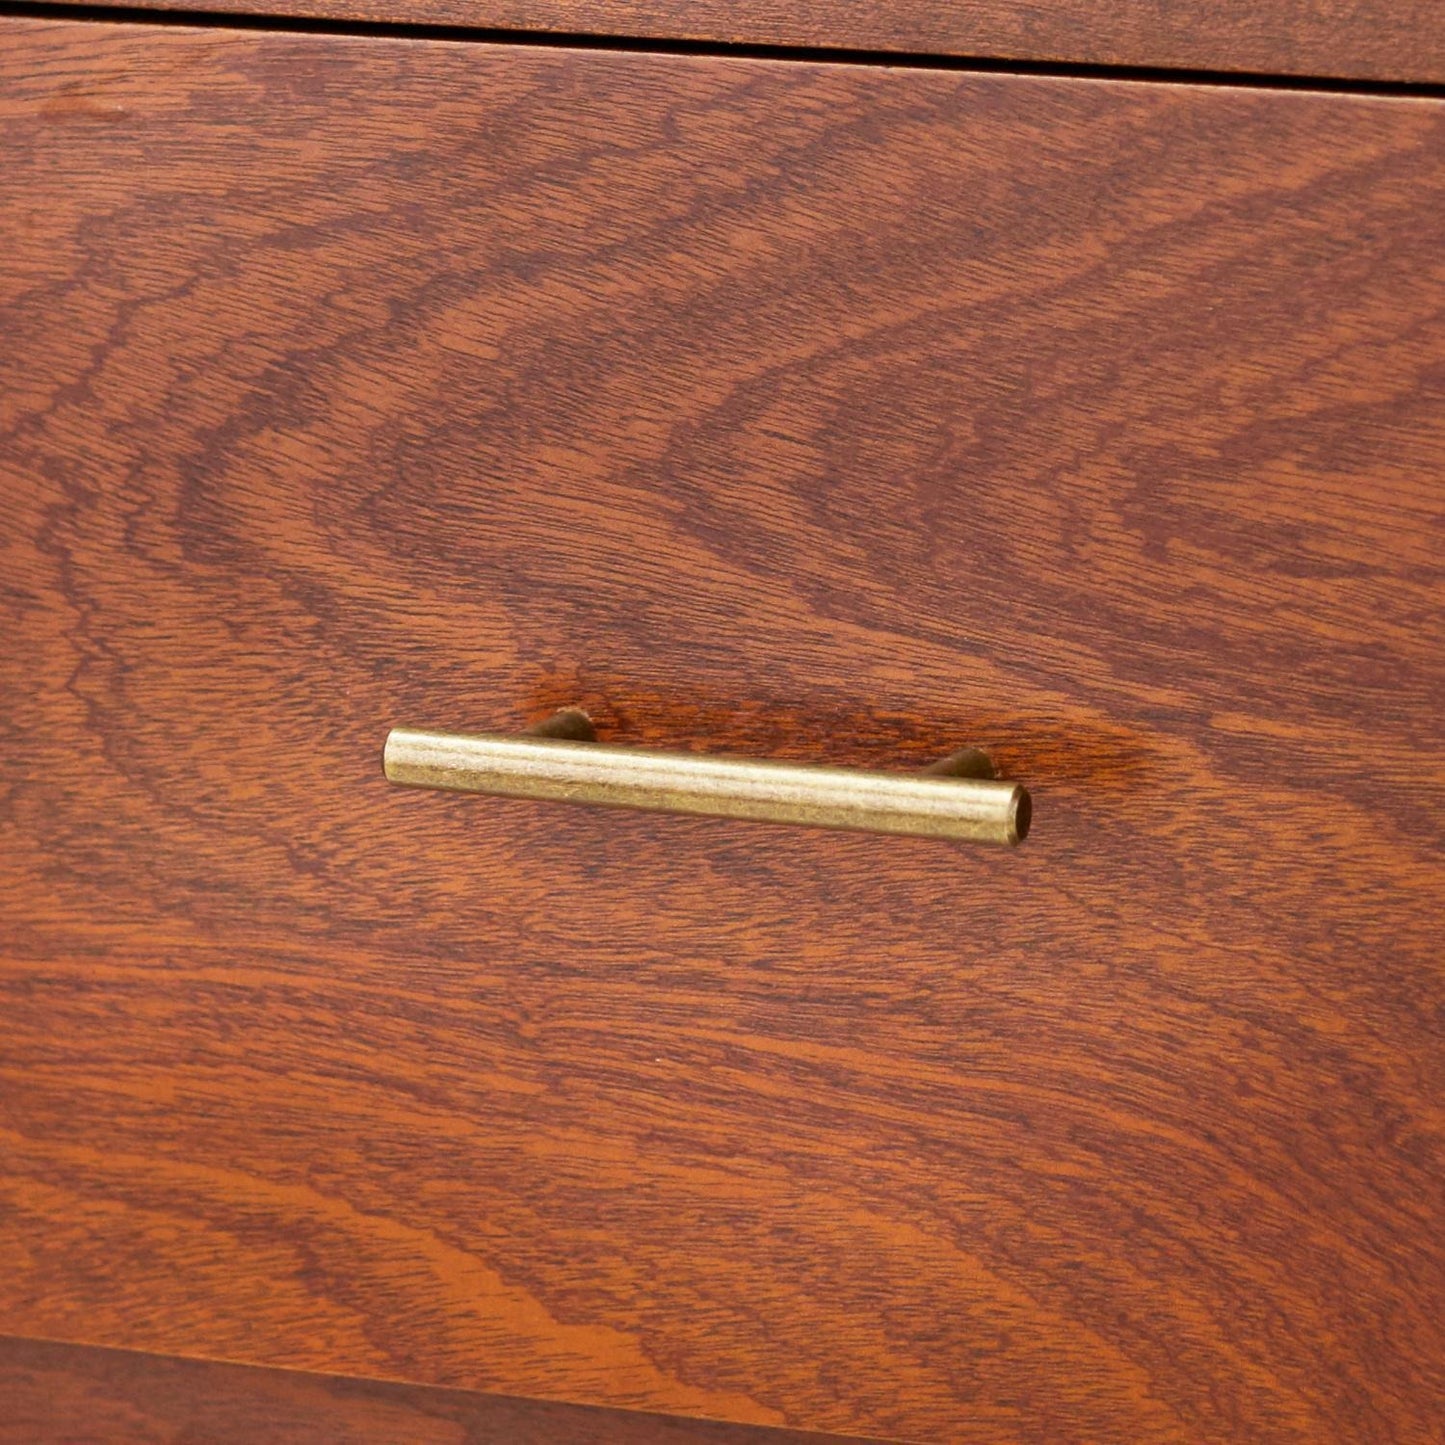 Desk Home Office 2-drawer Mid-Century Style Modern Desk in Walnut Finish